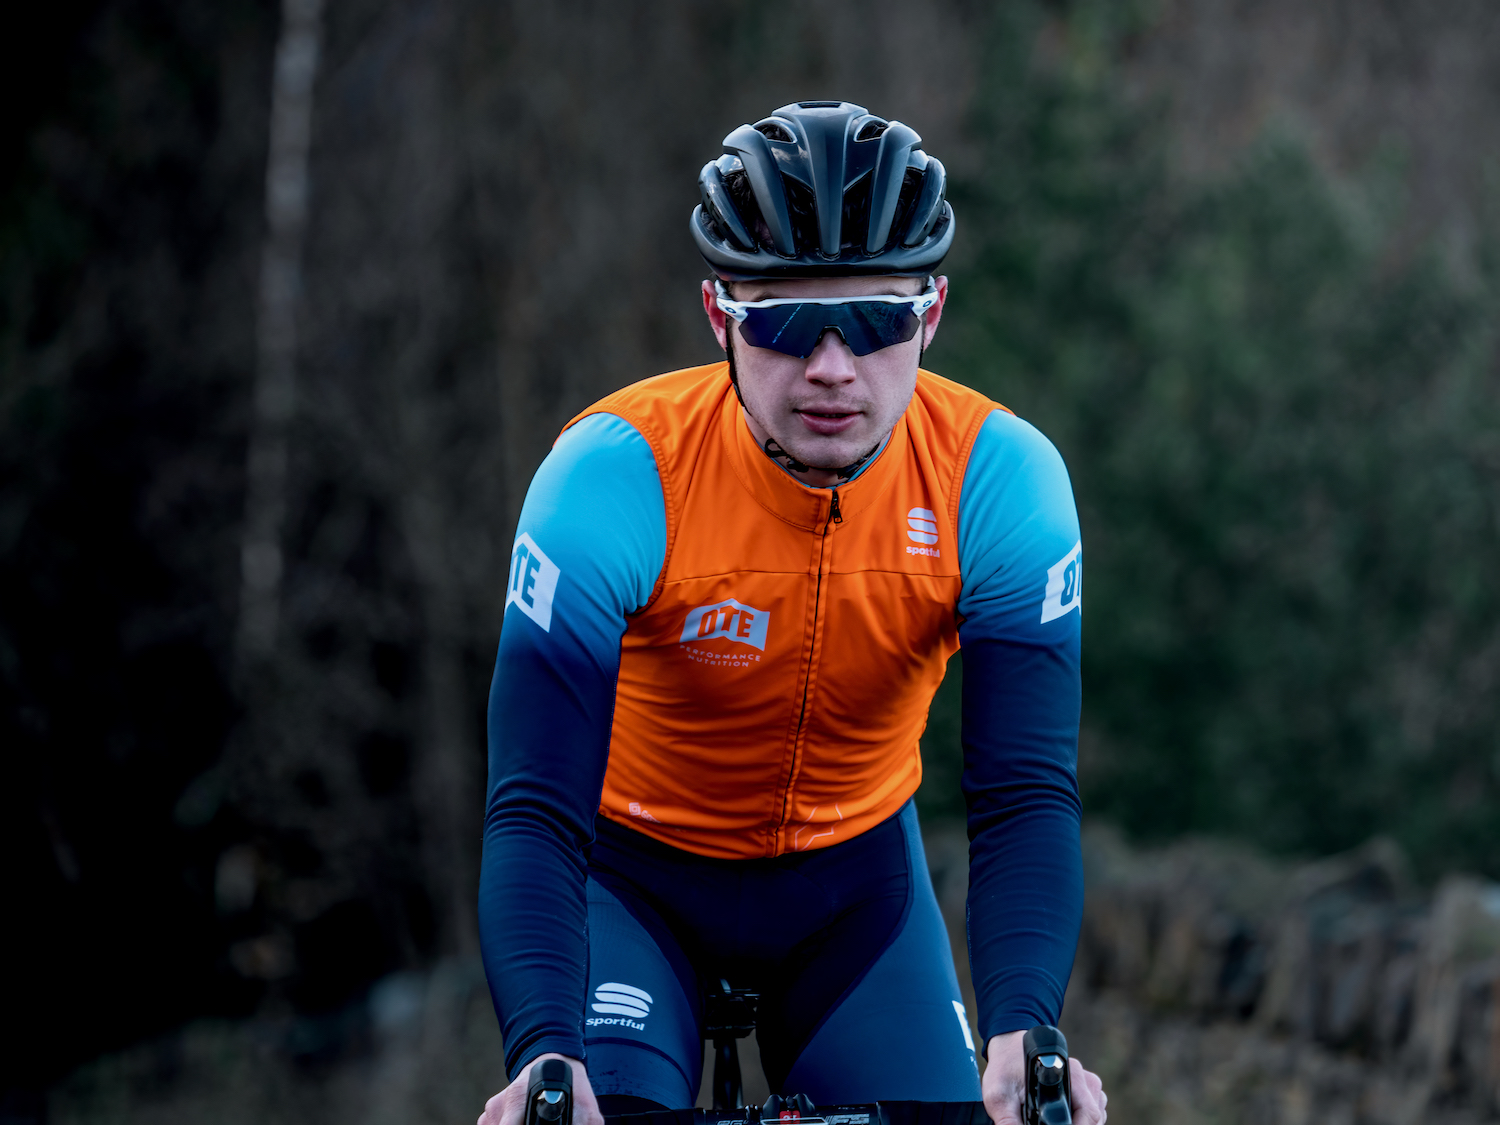 Cyclist wearing OTE Sports cycling gear.